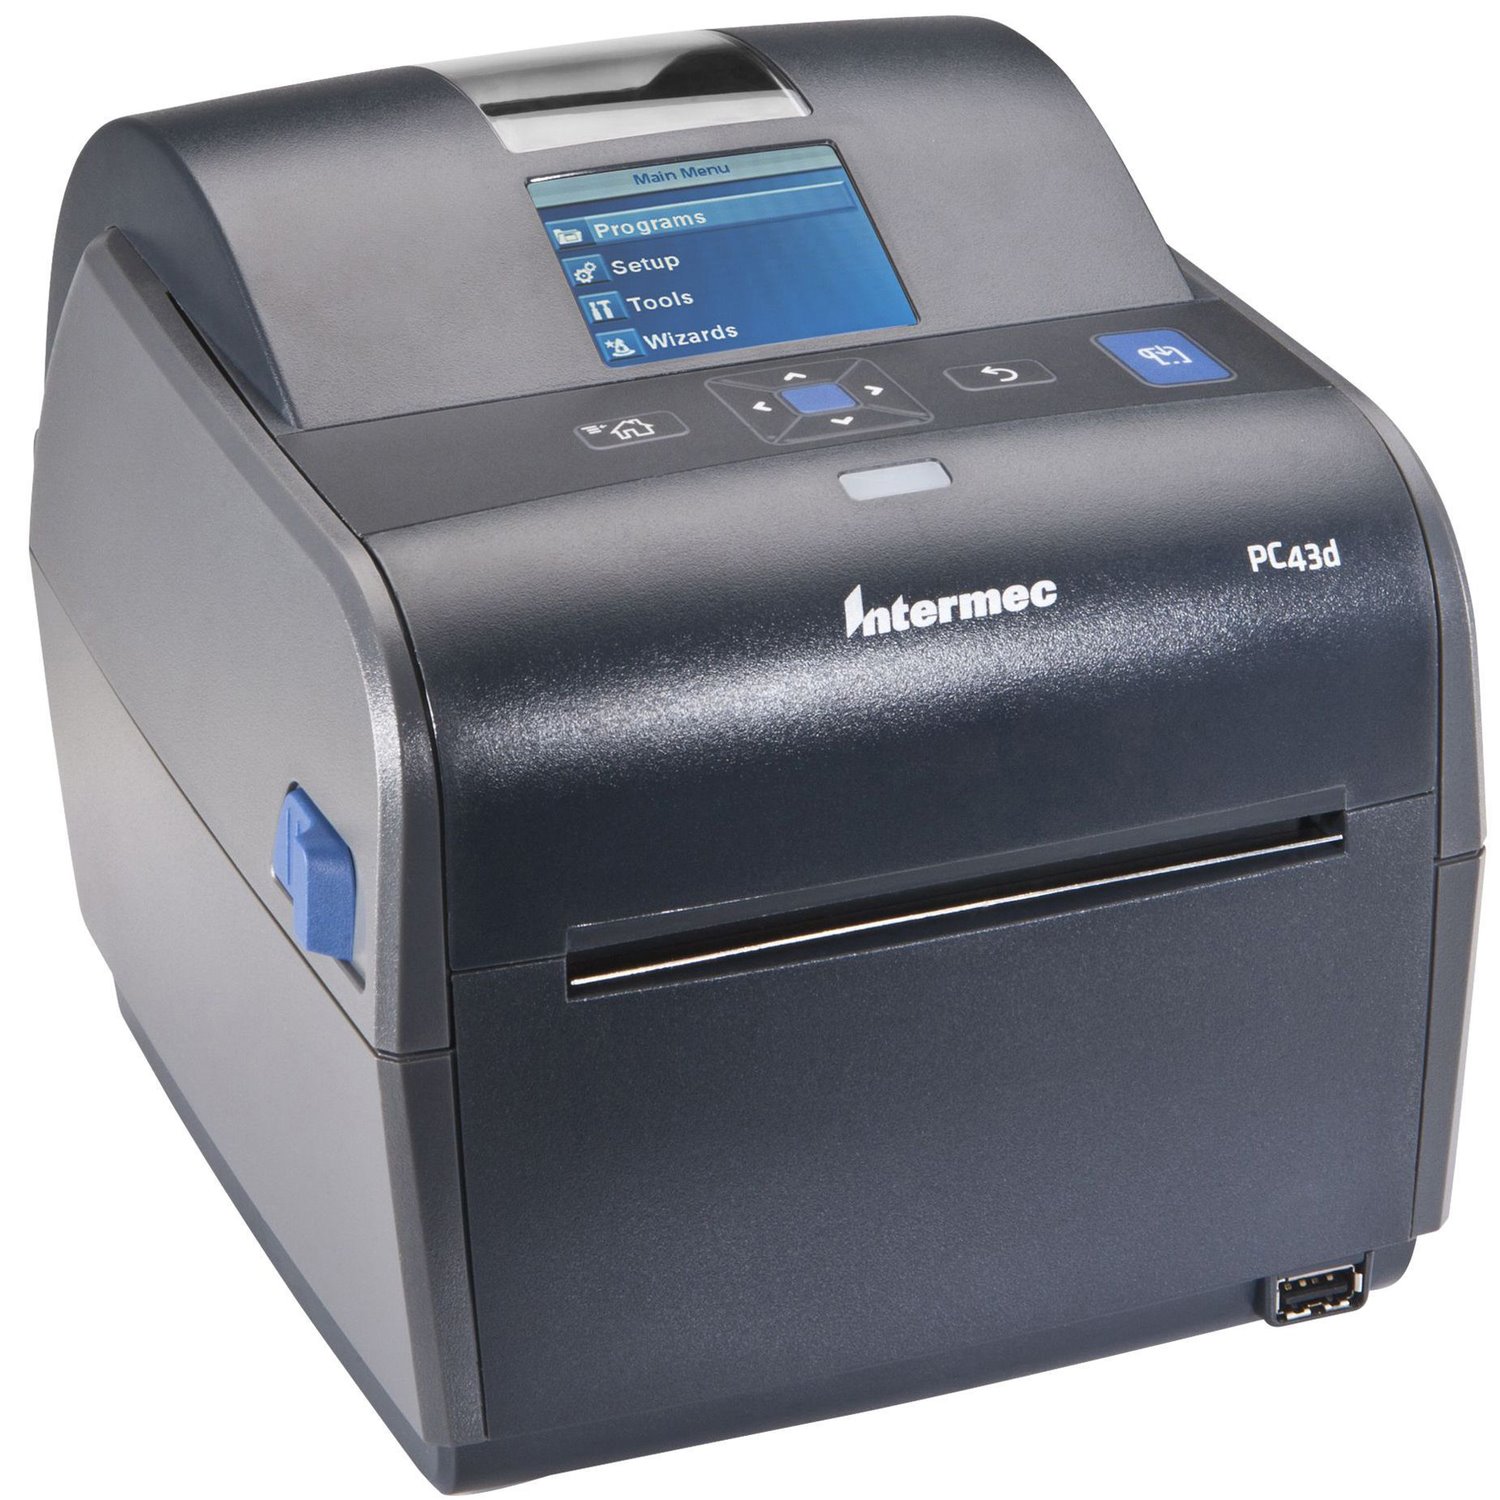 Intermec PC43d Desktop Direct Thermal Printer - Monochrome - Label Print - USB